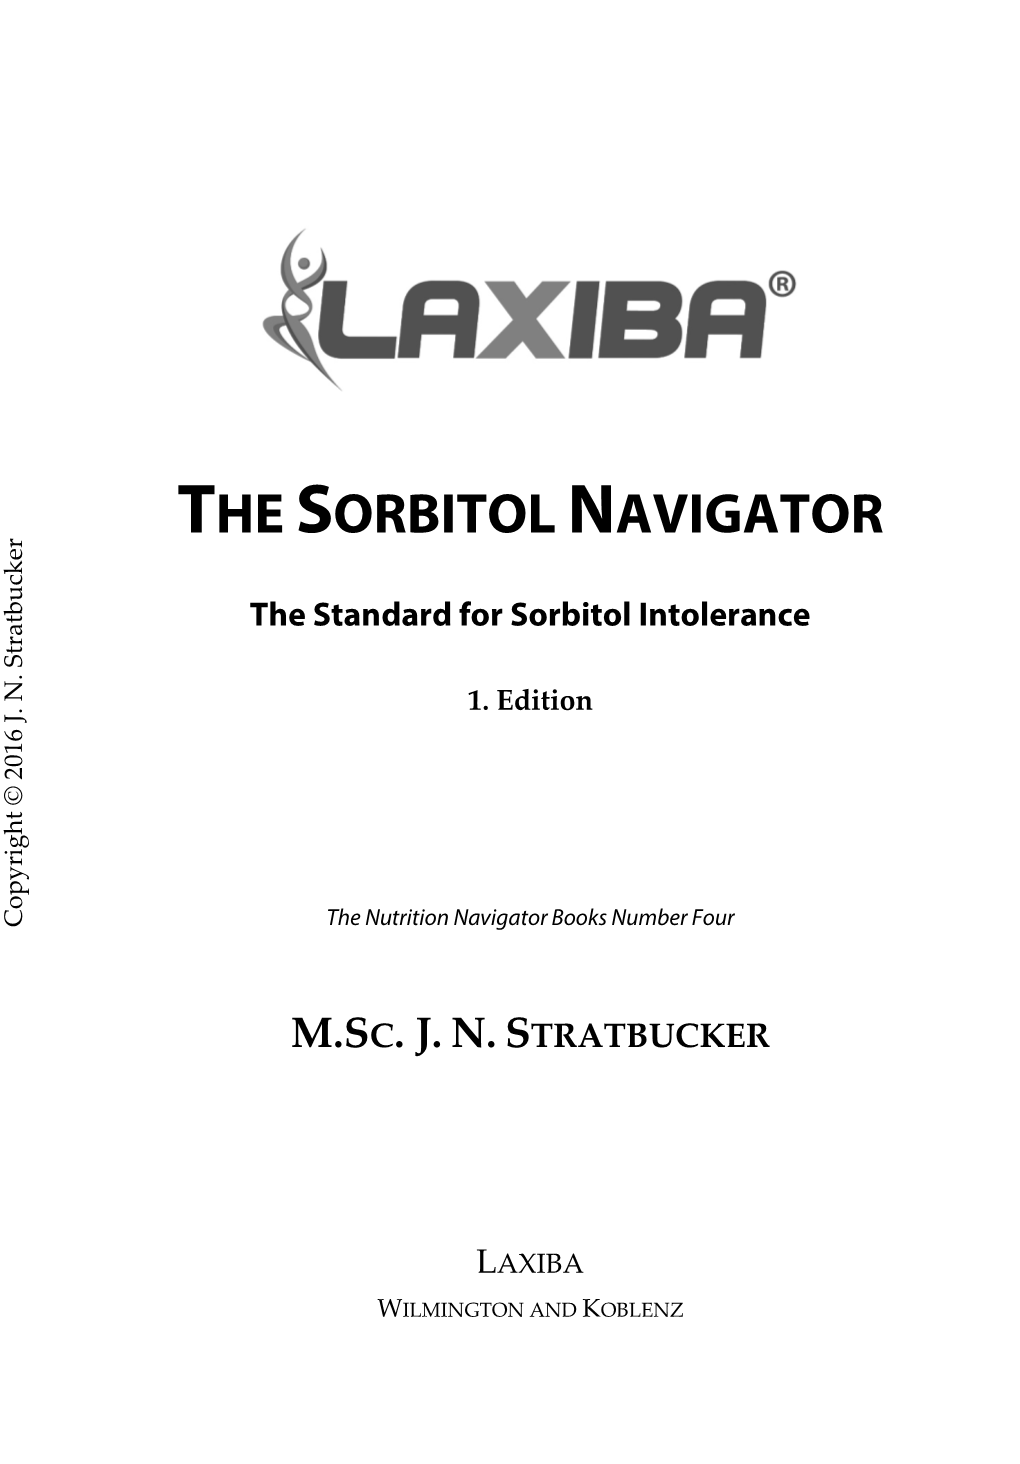 The Sorbitol Navigator